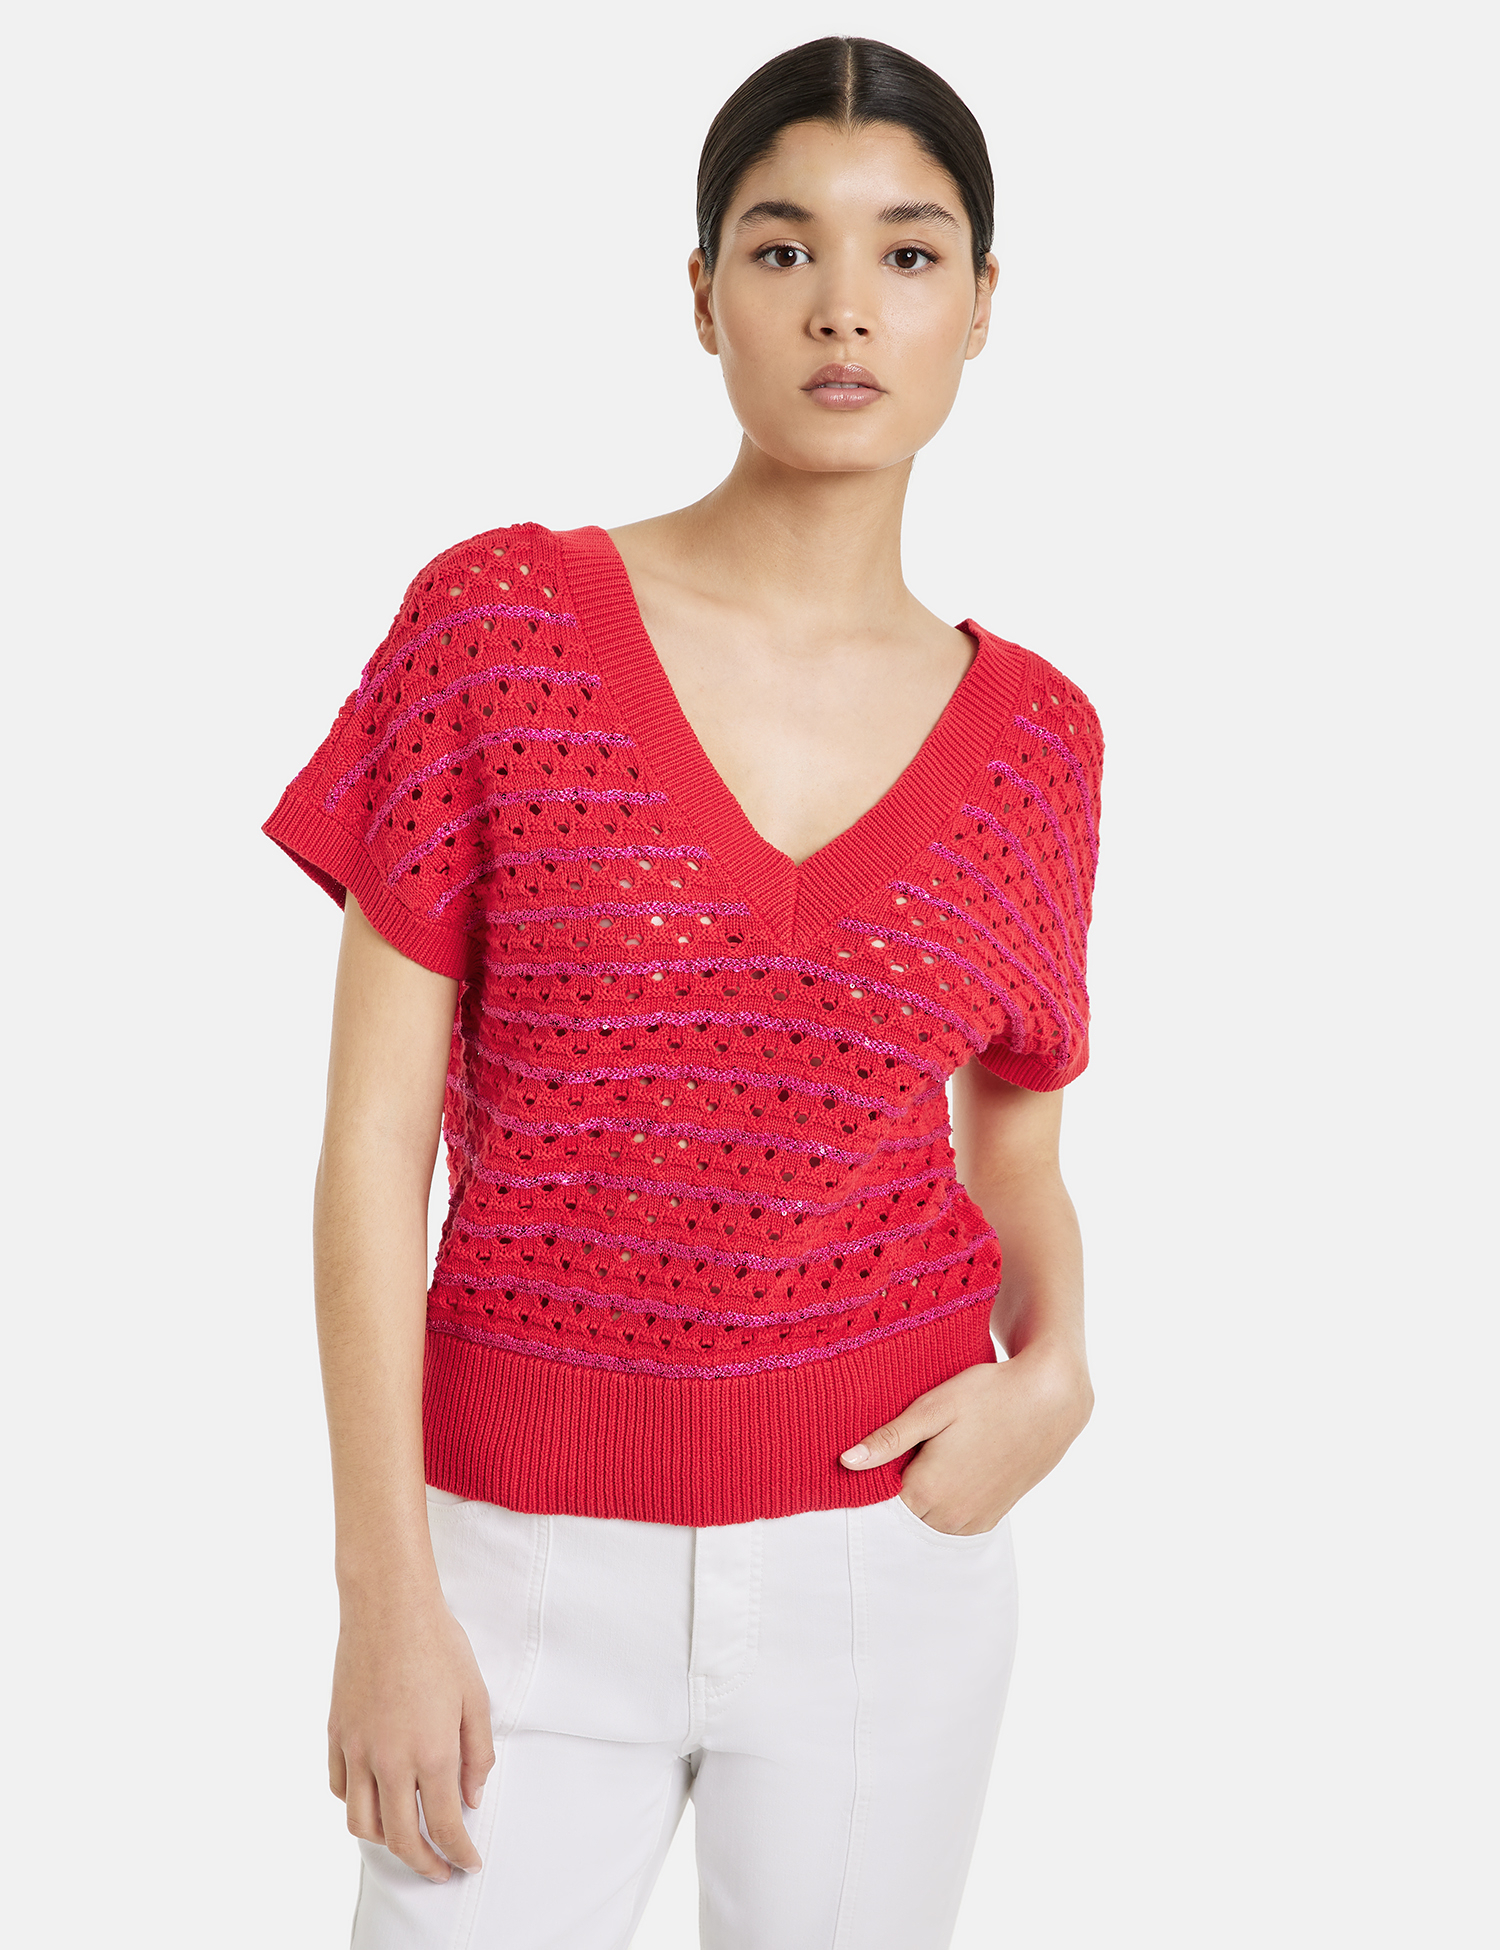 Свитер TAIFUN Strick, Shirt, Top, Body, цвет Digital Red geringelt фотографии